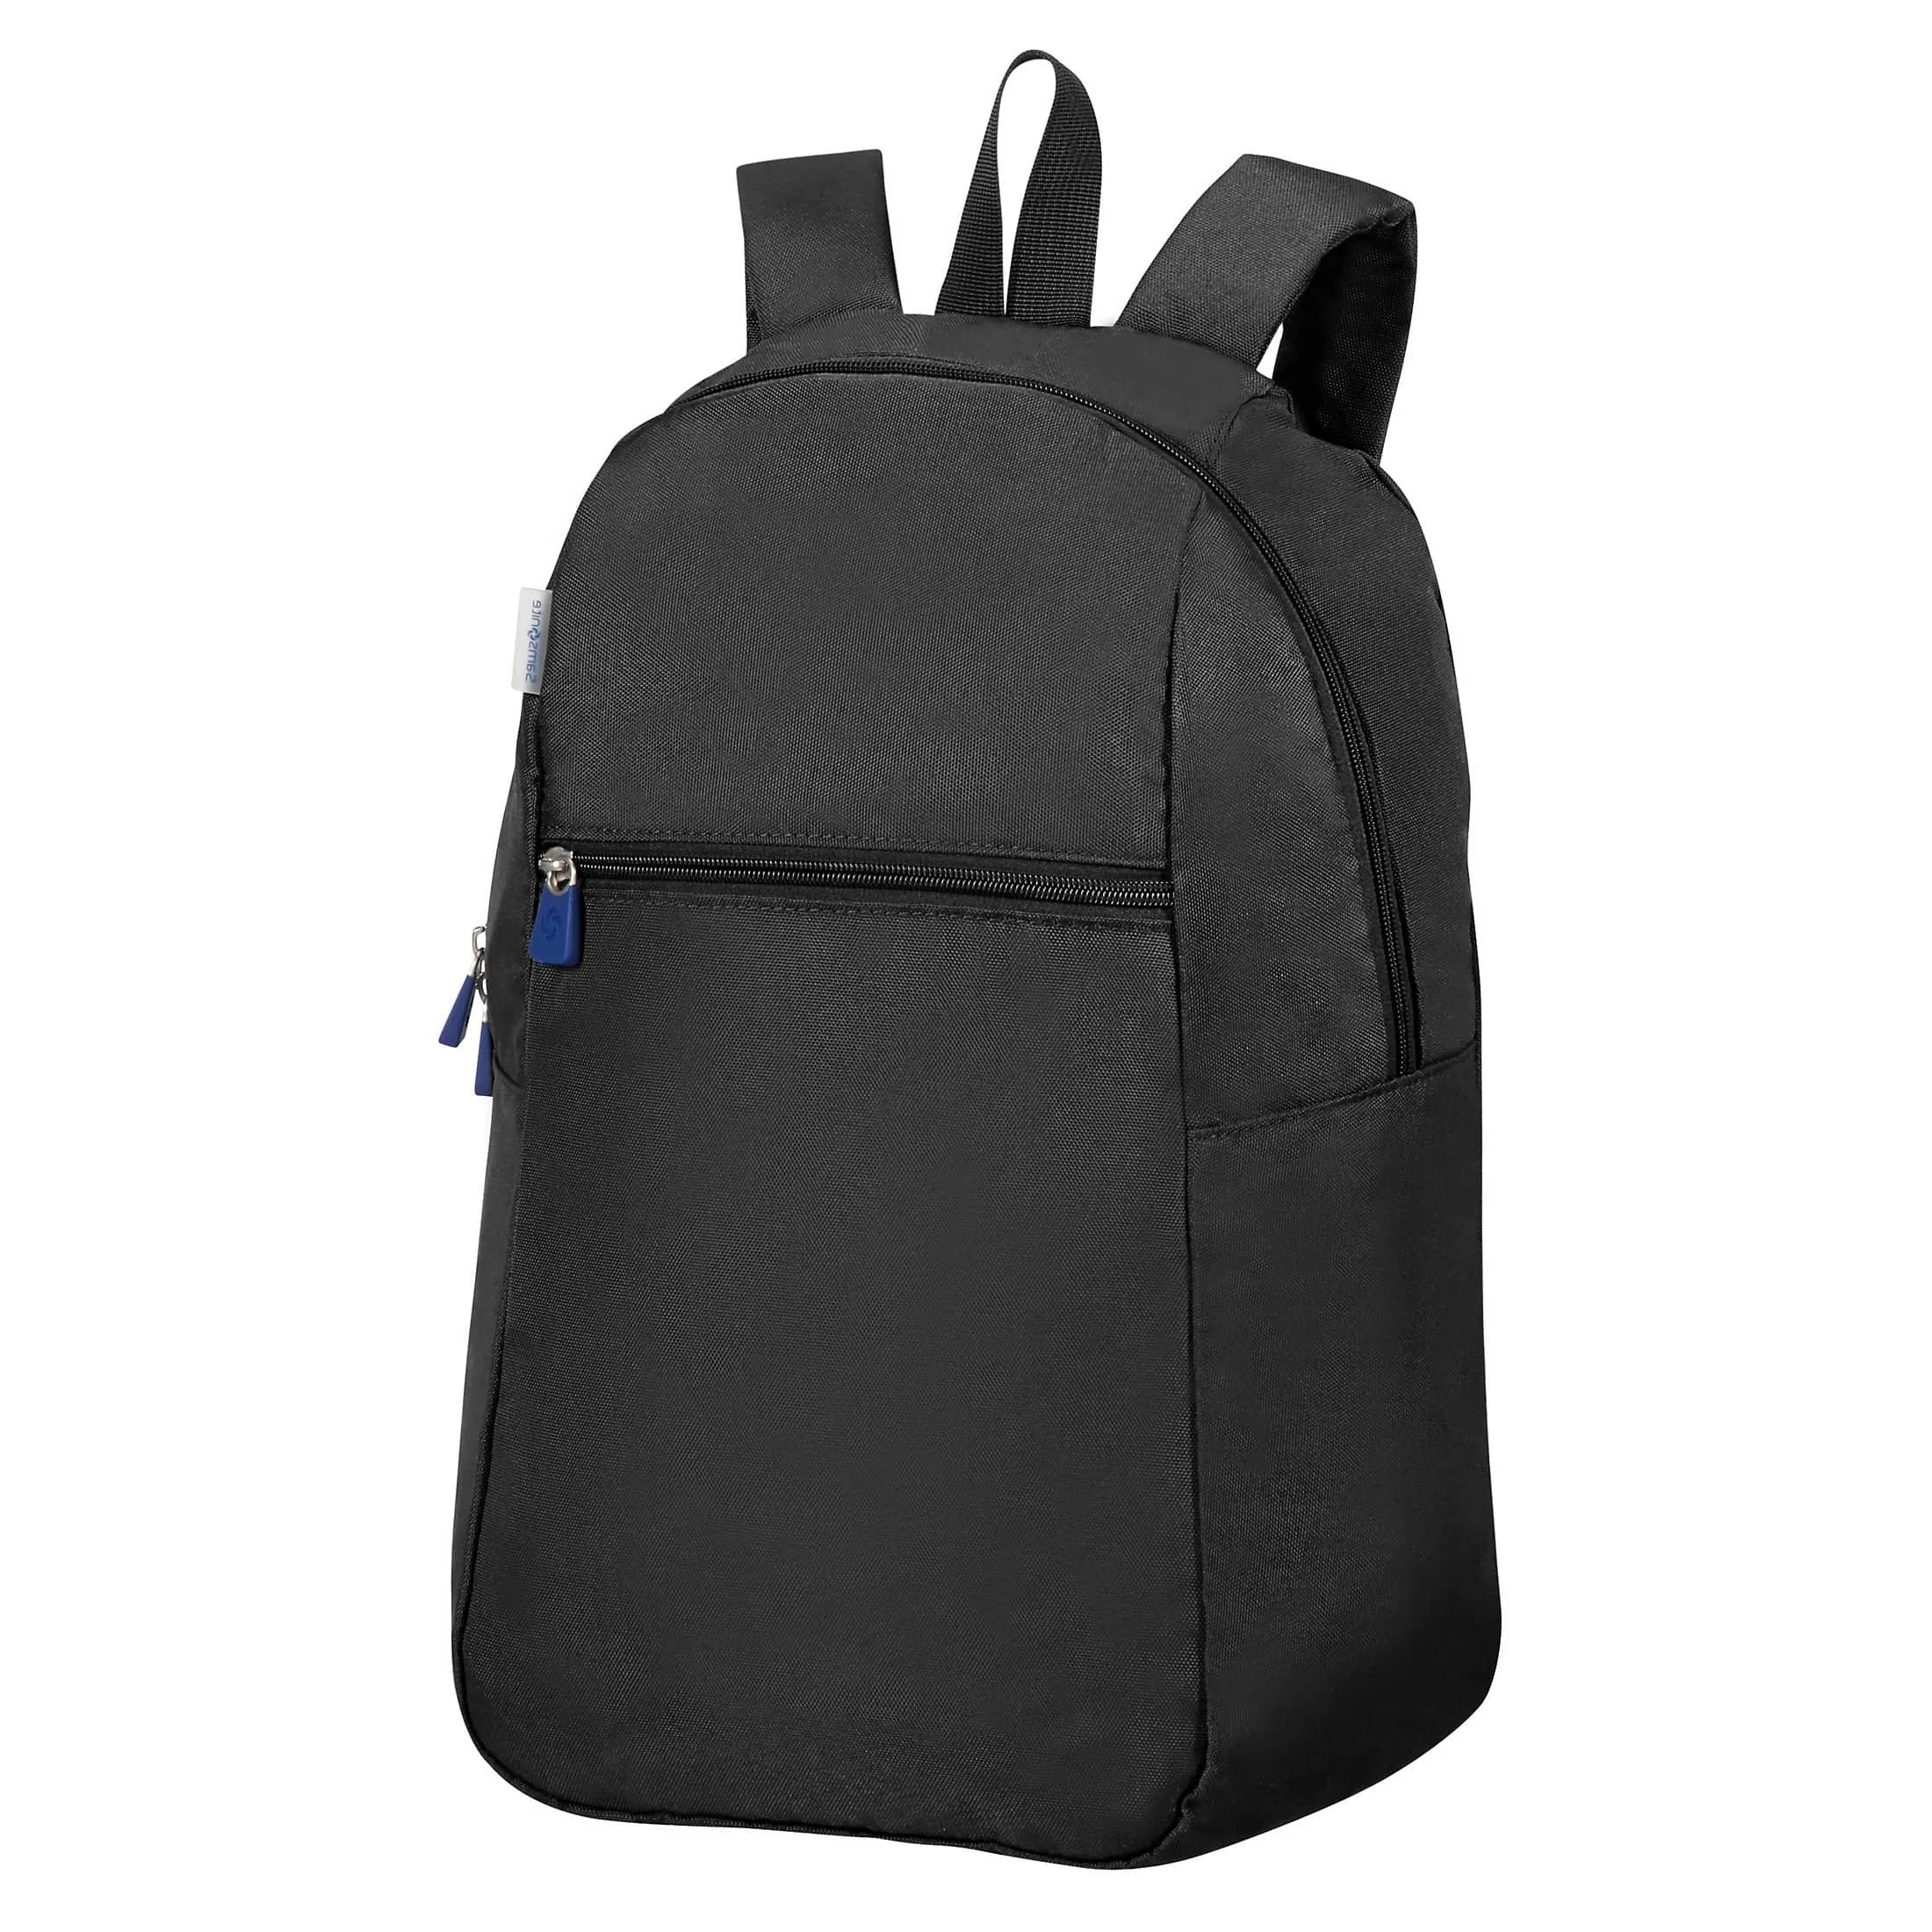 Samsonite Travel Accessories Foldable Backpack 44 cm - black